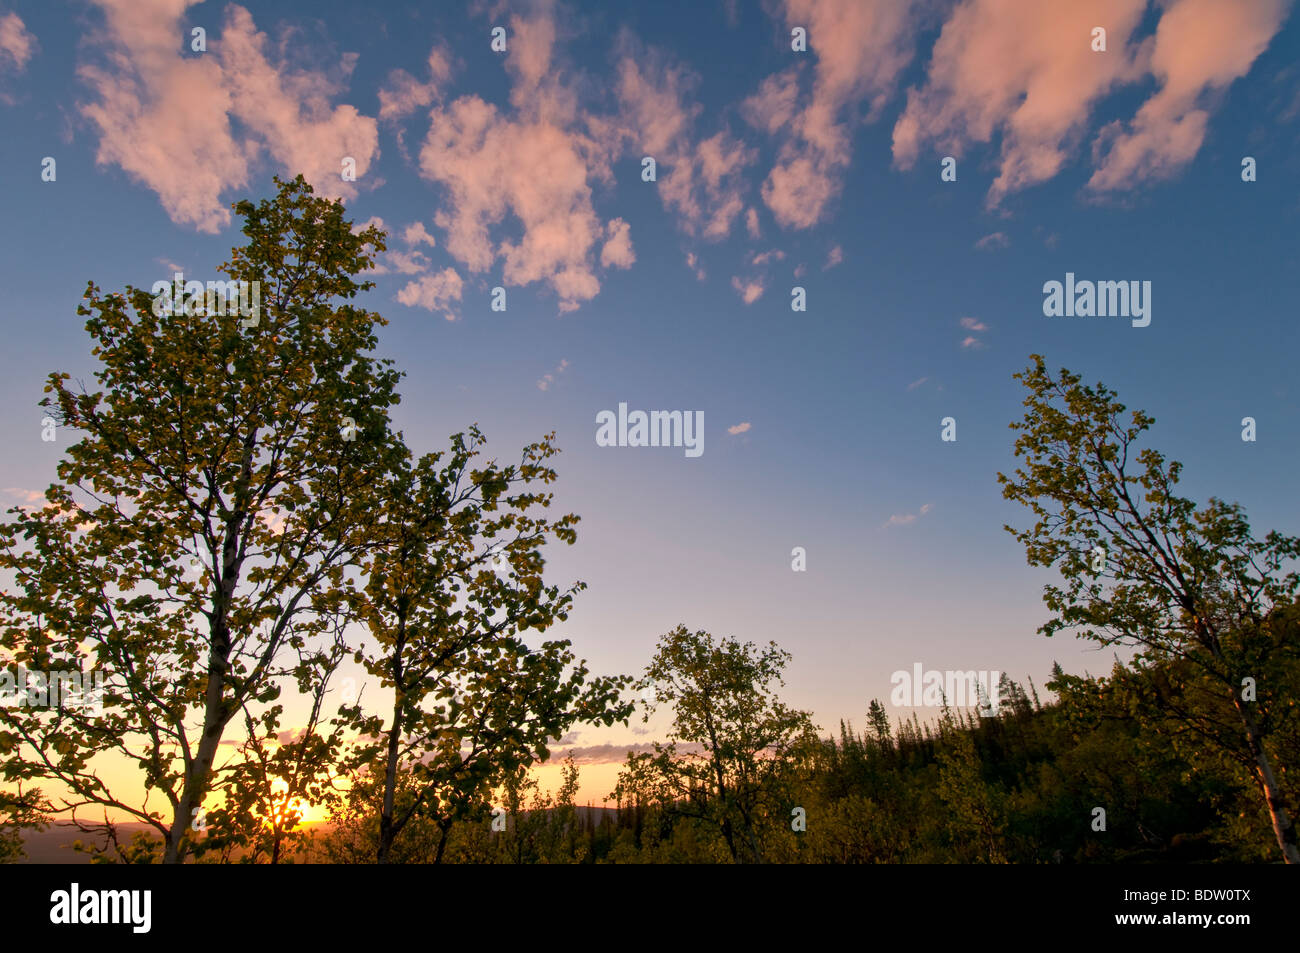 Landschaft Bei mitternachtssonne in gaellivare, lappland, SCHWEDEN, paesaggio al sole di mezzanotte in Lapponia, Svezia Foto Stock